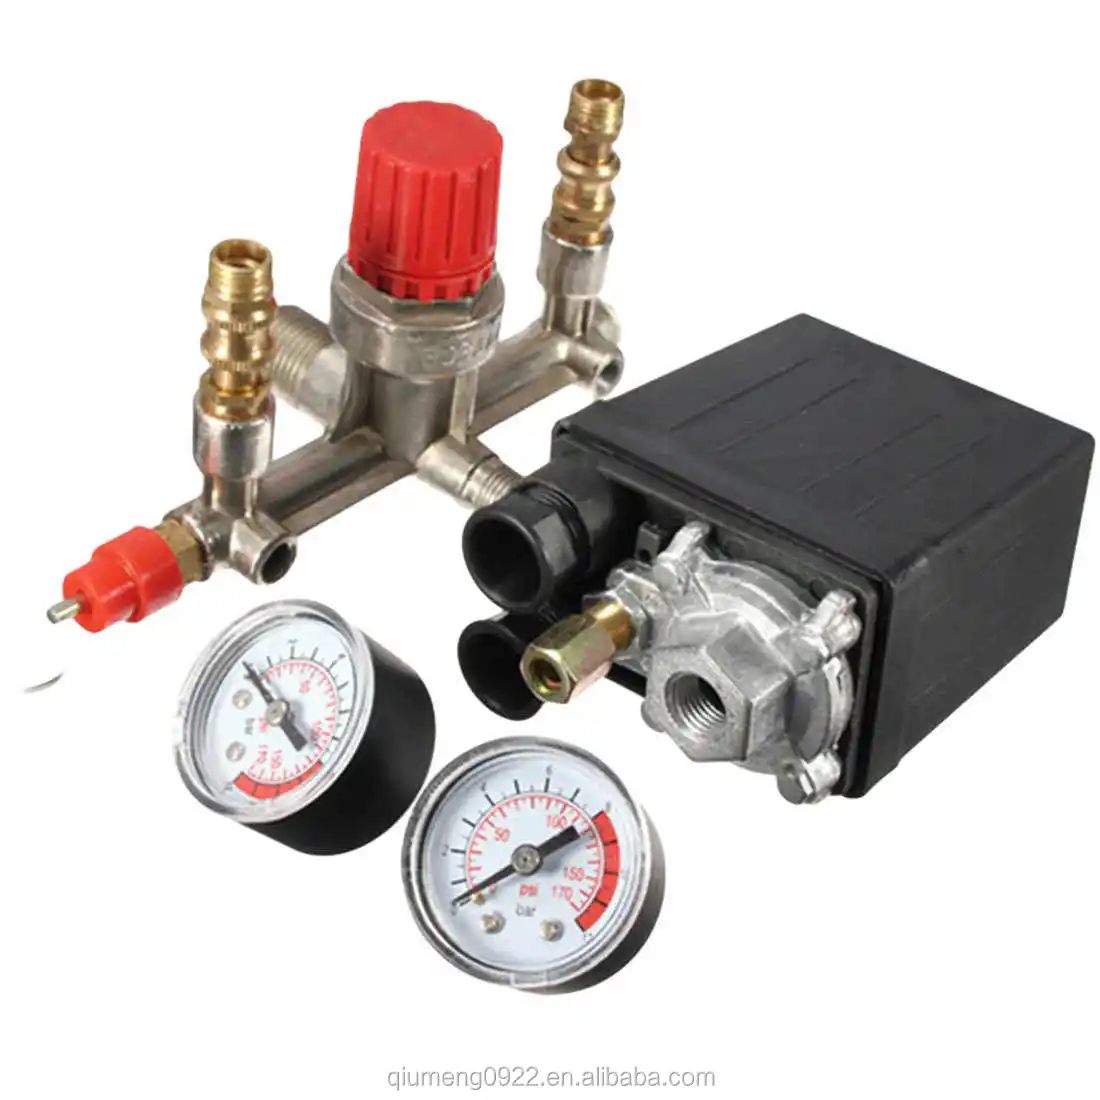 Valve Gauge REGULATOR HEAVY DUTY Pump Pressure Air Compressor Control Switch 